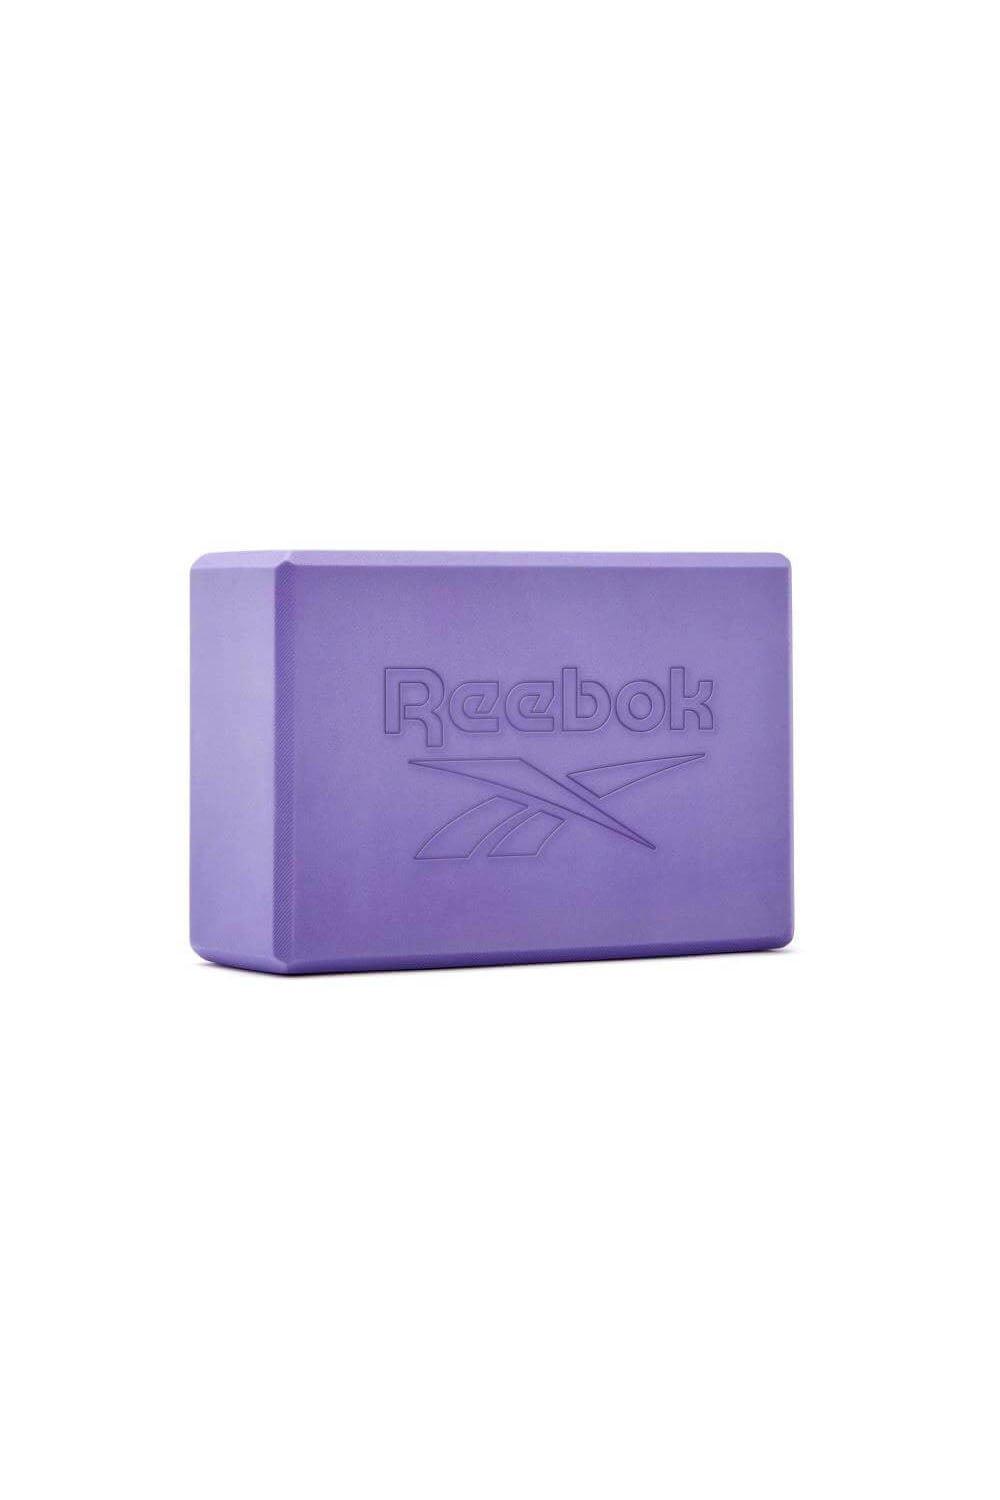 Reebok Yoga Block|purple